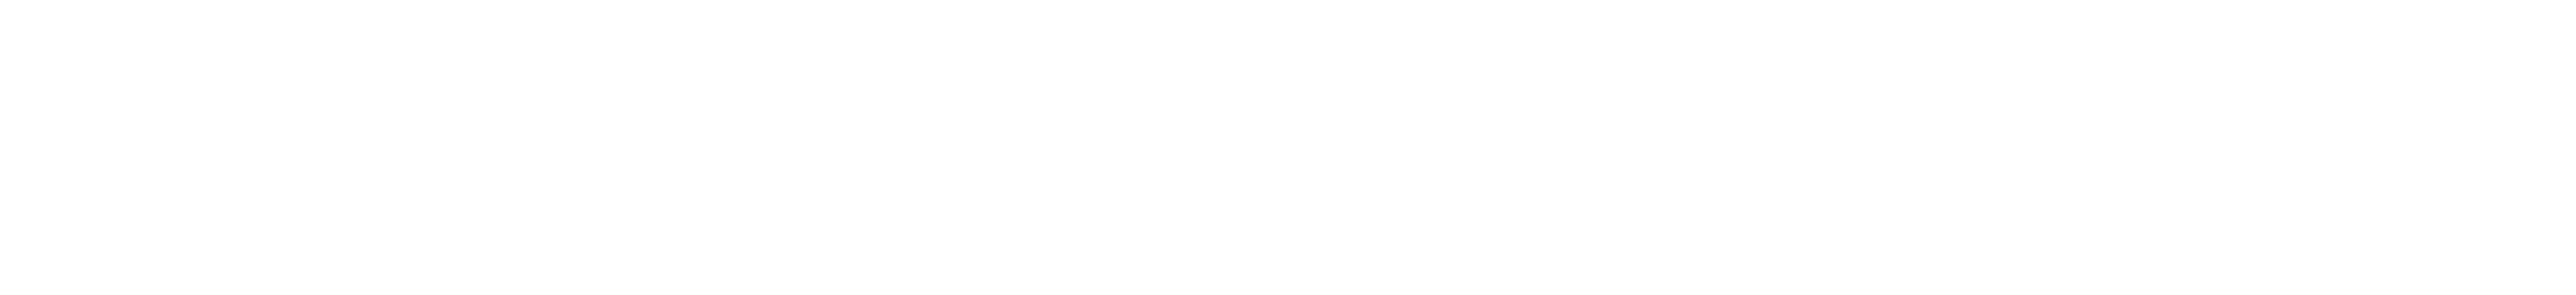 Pittsburgh Post-Gazette graphic logo.